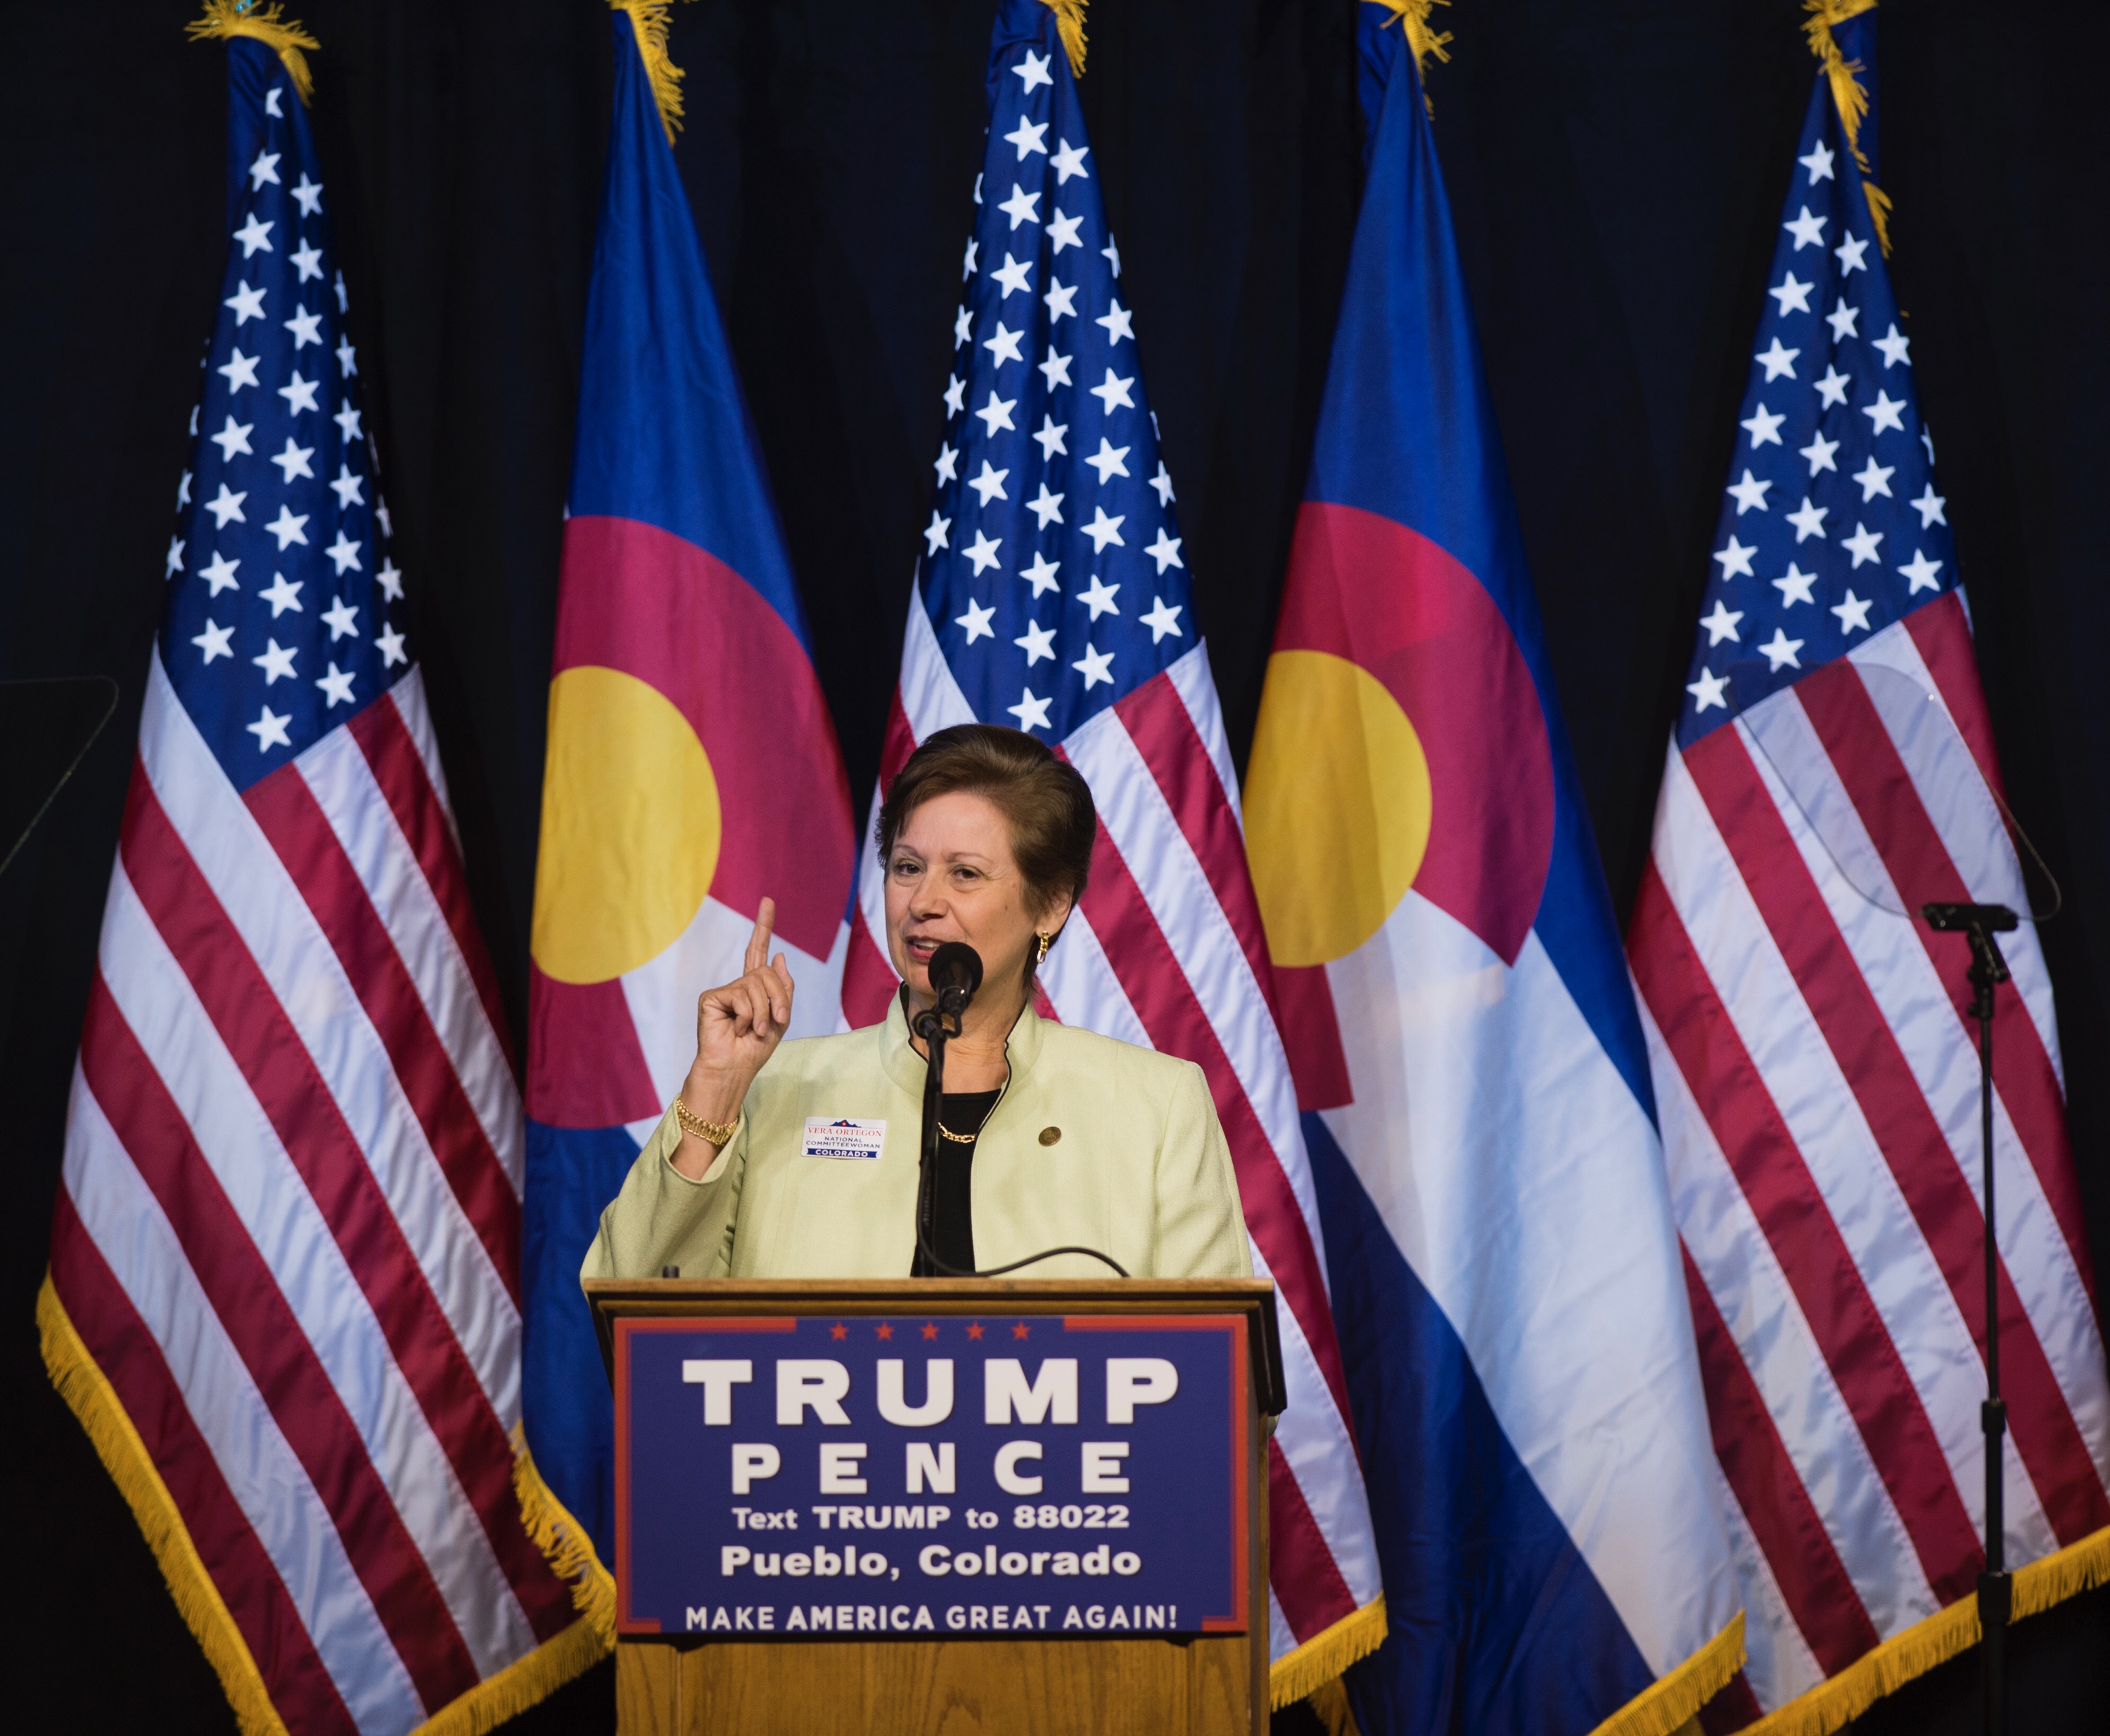 Vera Ortegon speaks prior to the speech by Donald Trump Monday October 3, 2016 at the Pueblo Convention Center in Pueblo, Colo. (Bryan Kelsen, The Pueblo Chieftain)